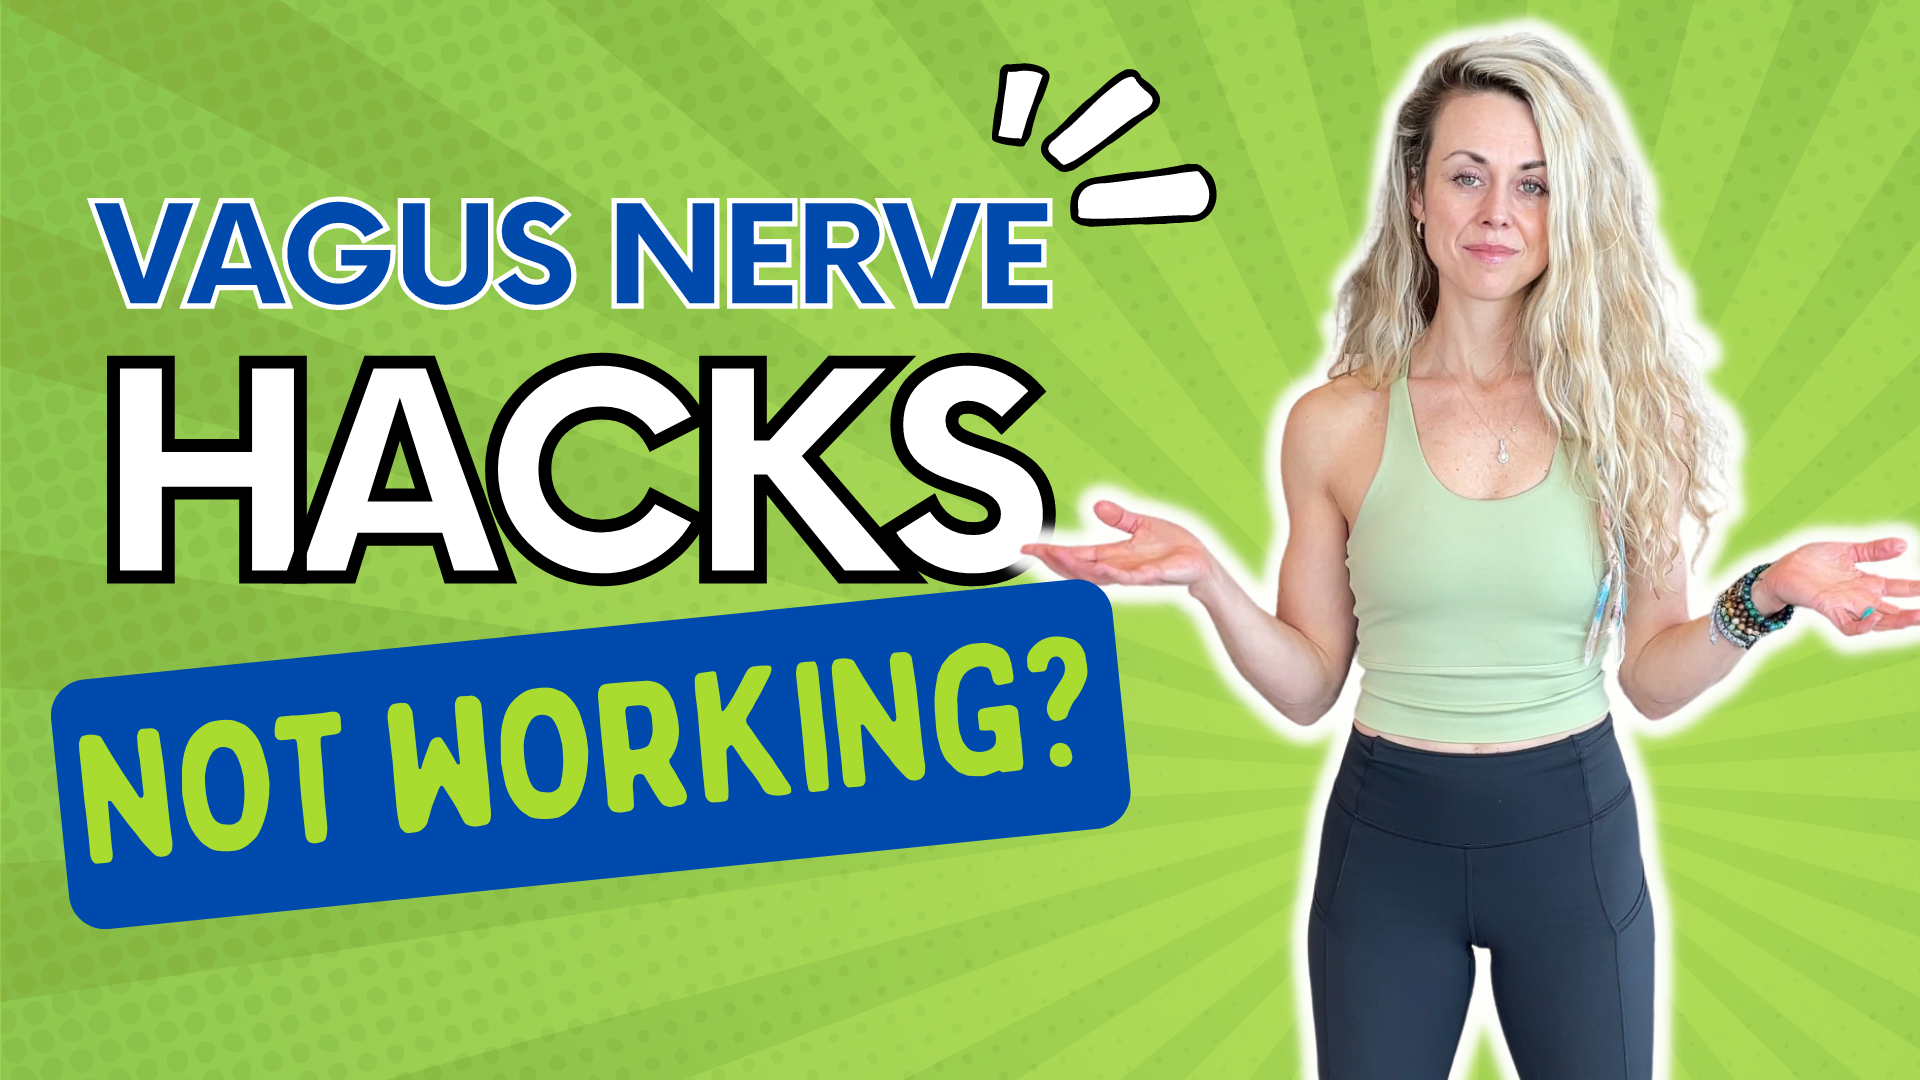 vagus nerve hacks not working